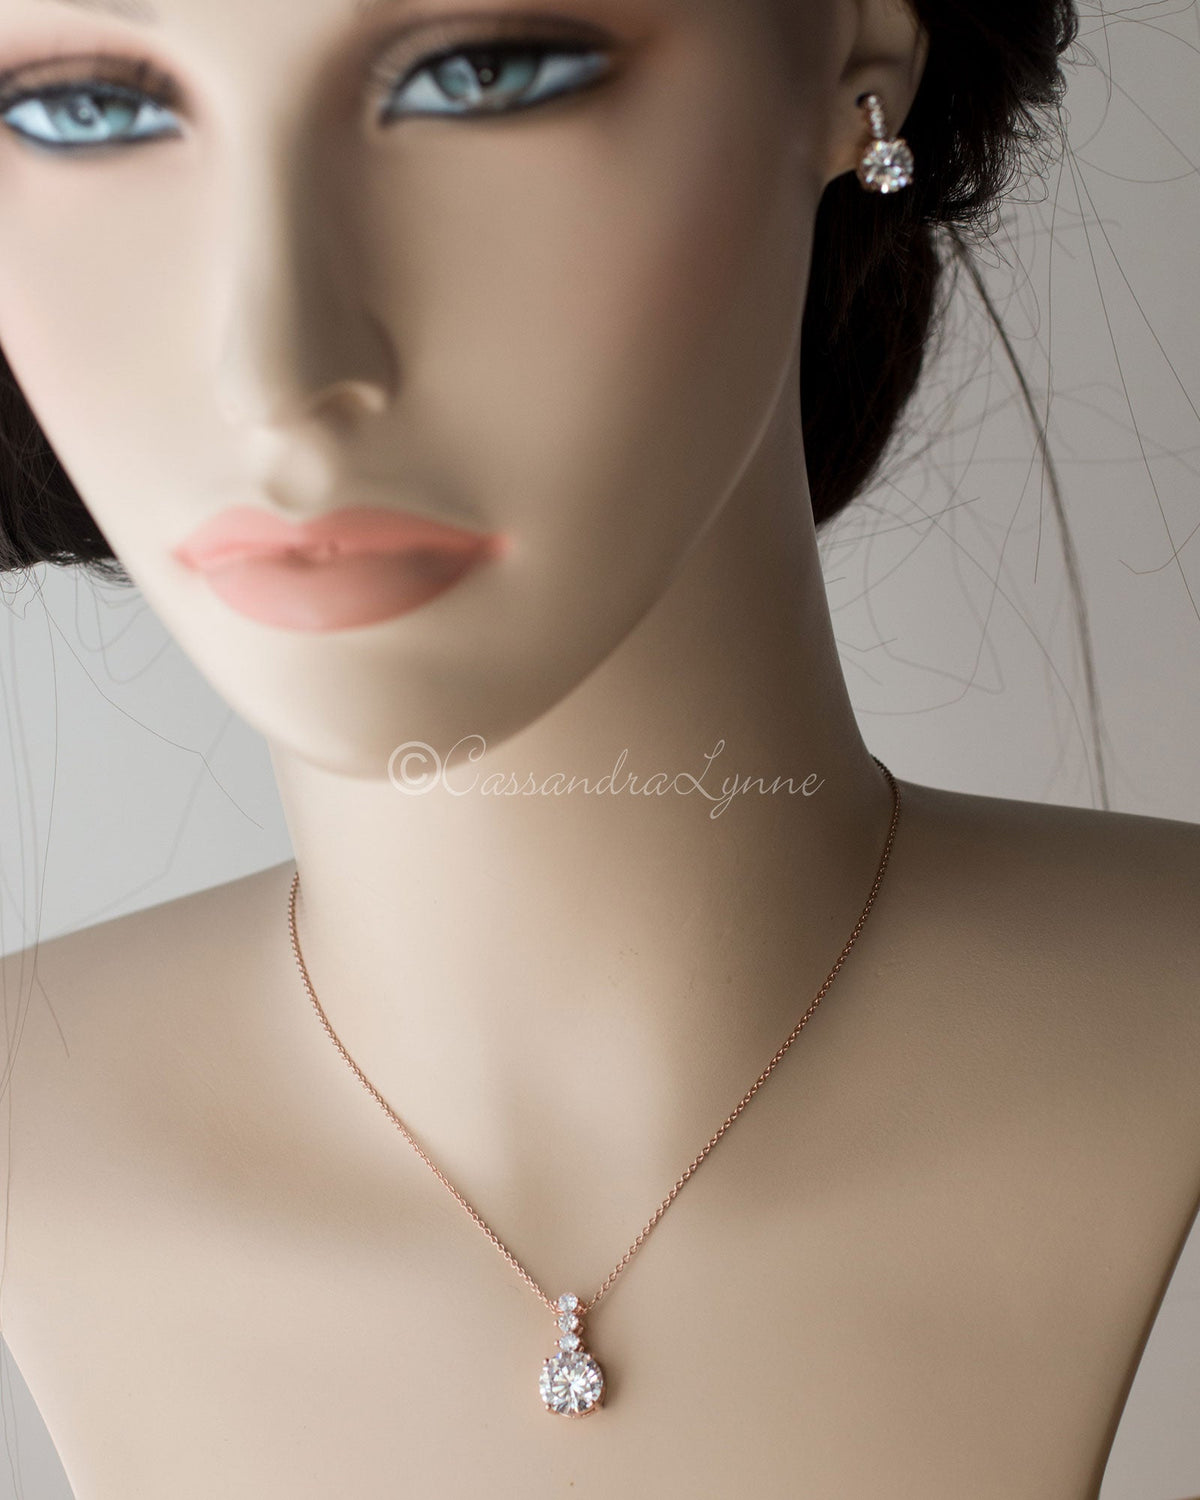 Bracelet and Necklace Accessories - Cassandra Lynne